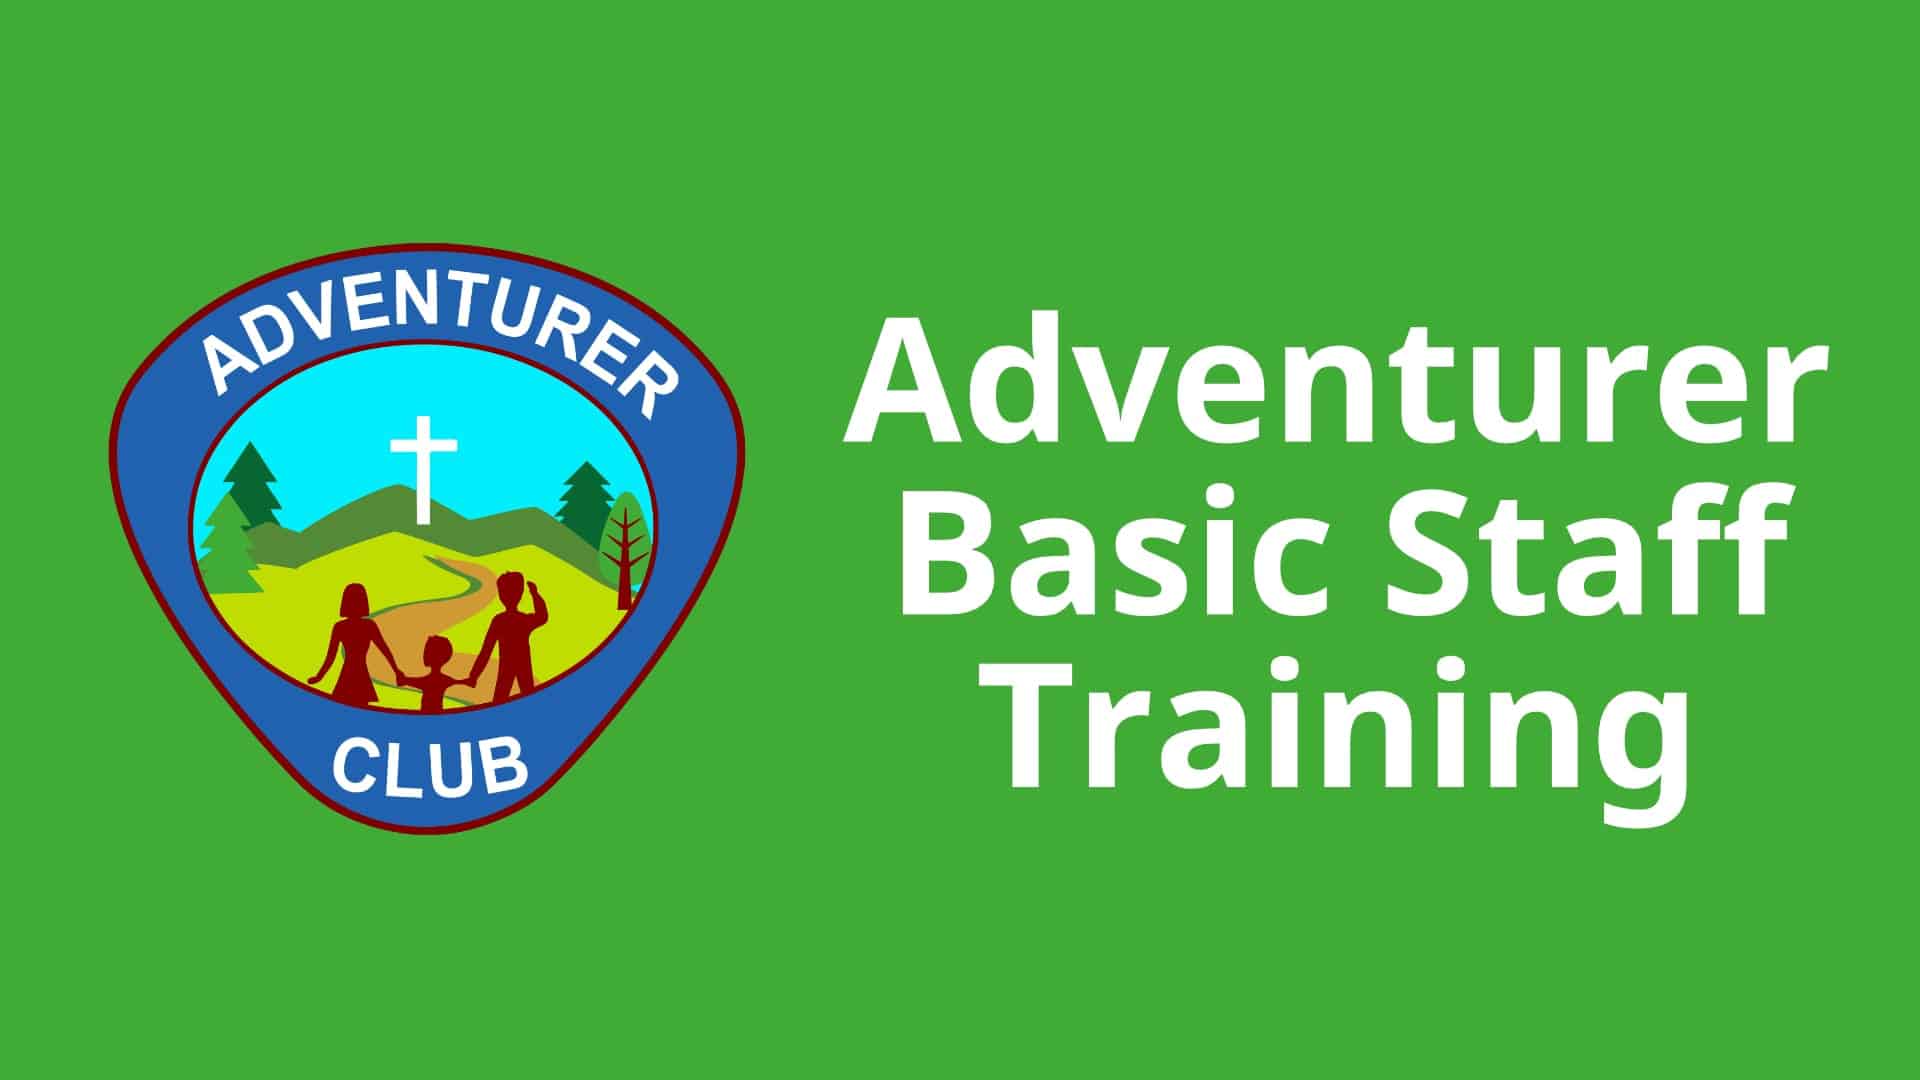 Adventurer Basic Staff Training Course Image